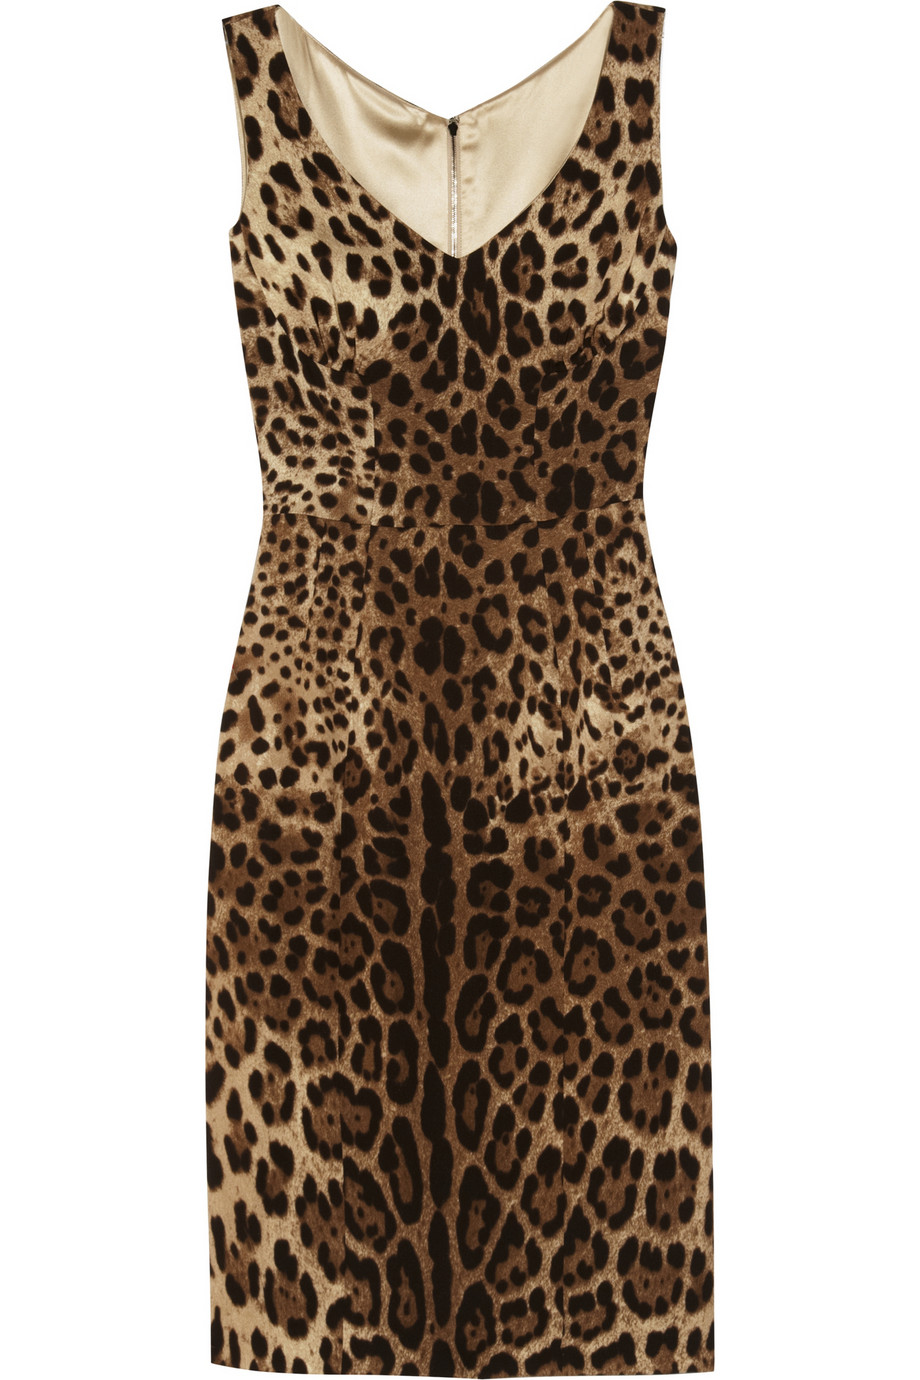 Dolce & gabbana Leopard-print Crepe Dress in Multicolor (leopard print ...